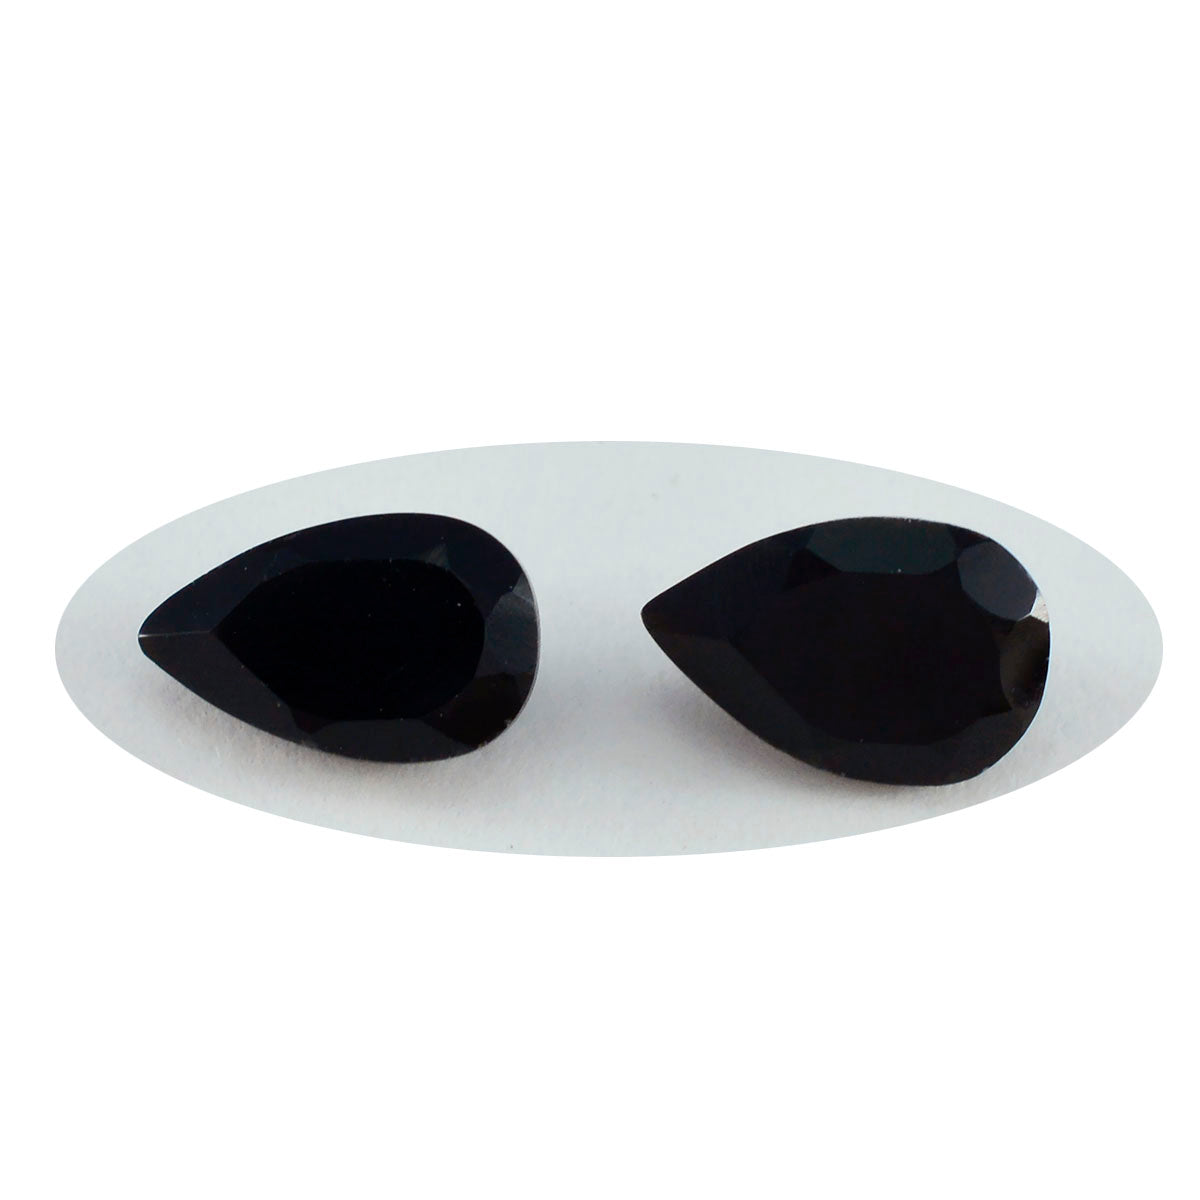 Riyogems 1PC Genuine Black Onyx Faceted 6x9 mm Pear Shape AA Quality Gem